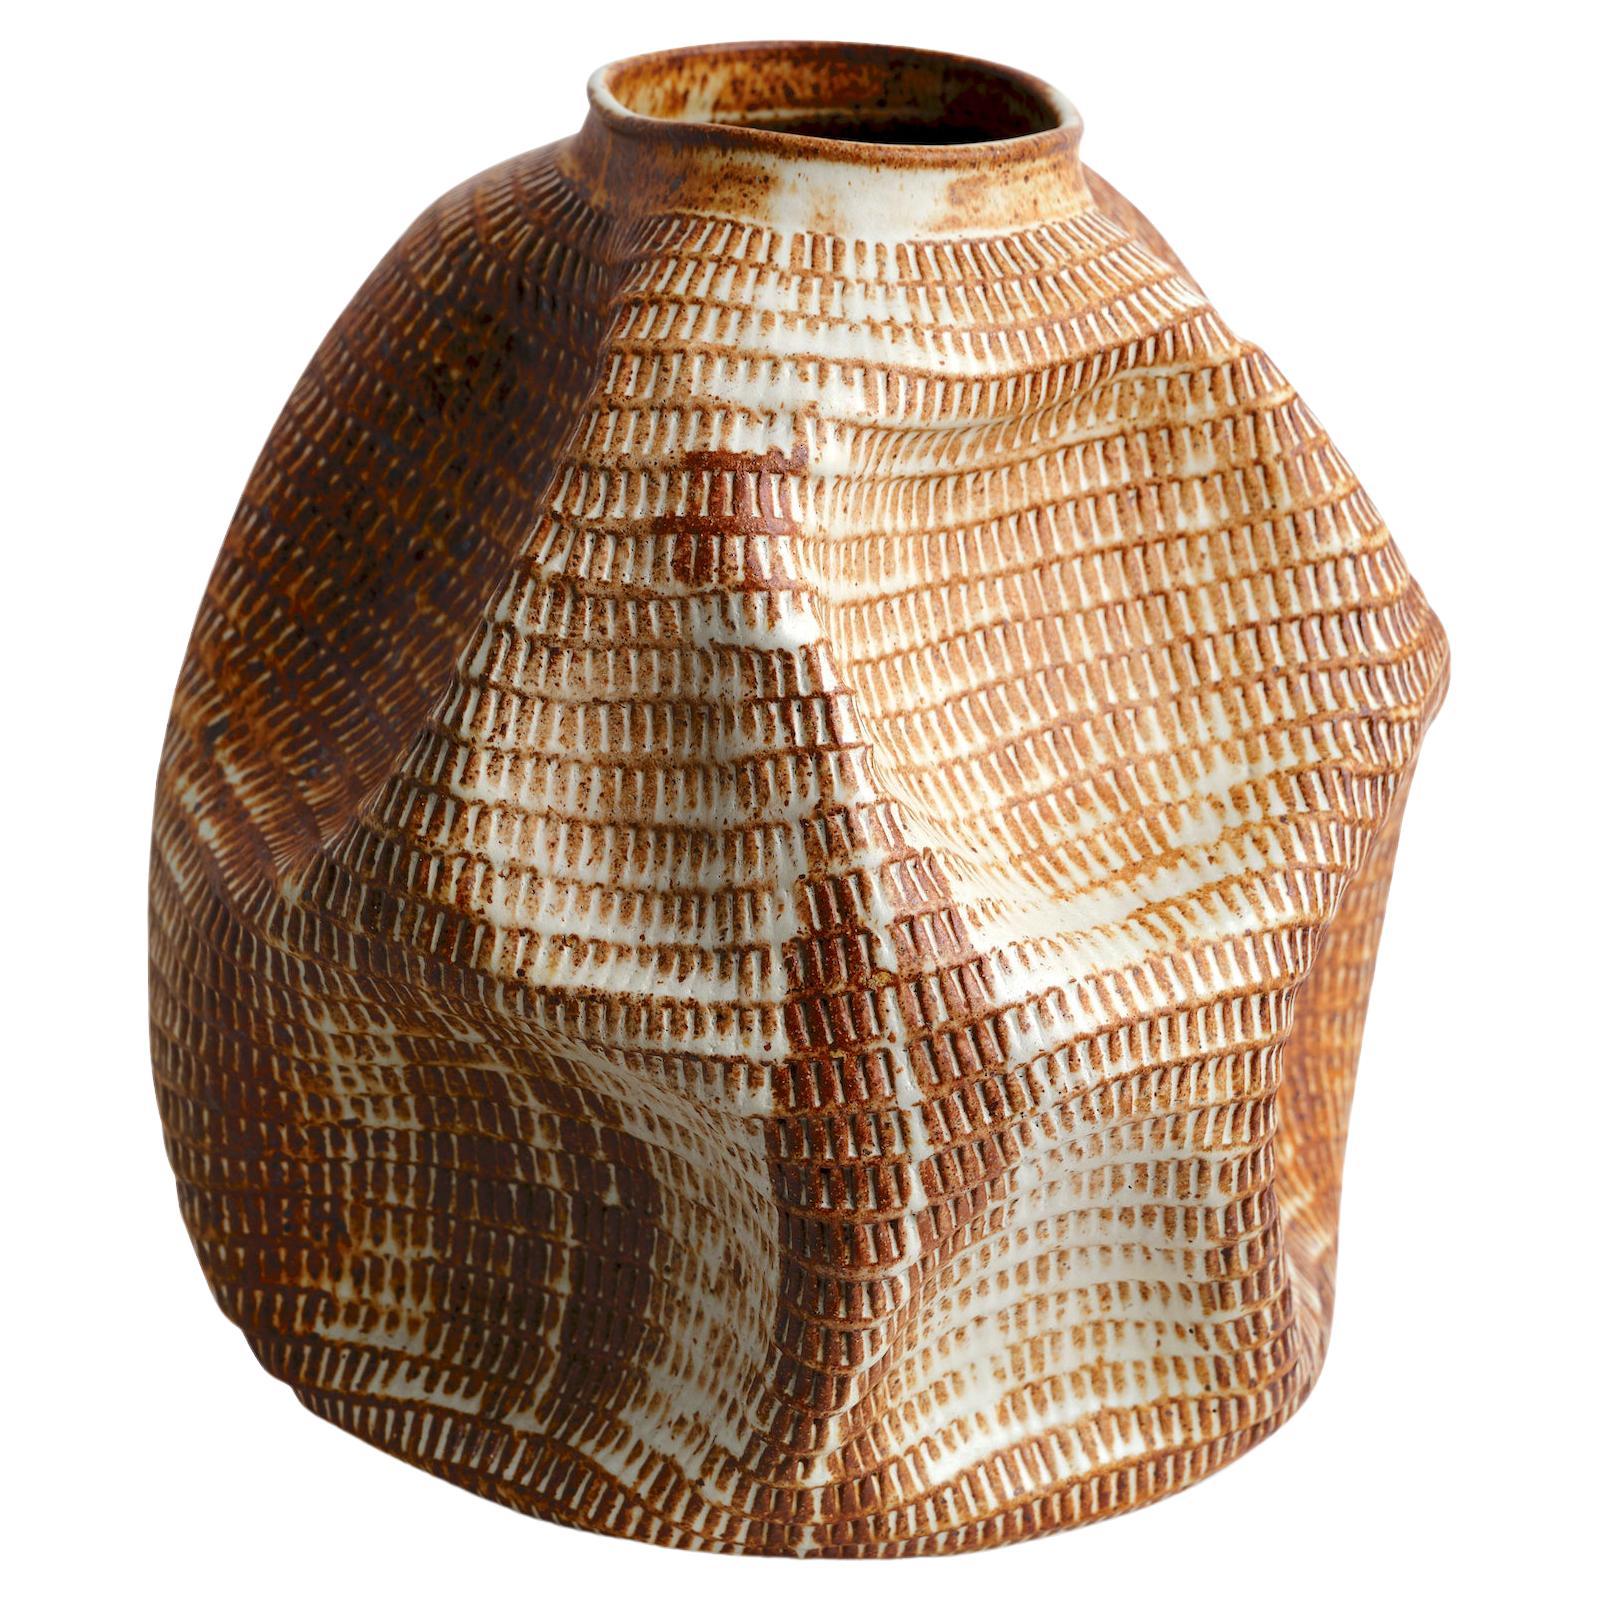 Skoby Joe Handmade Terra Cotta Brown Ceramic Vase Mid-Century Modern Vessel